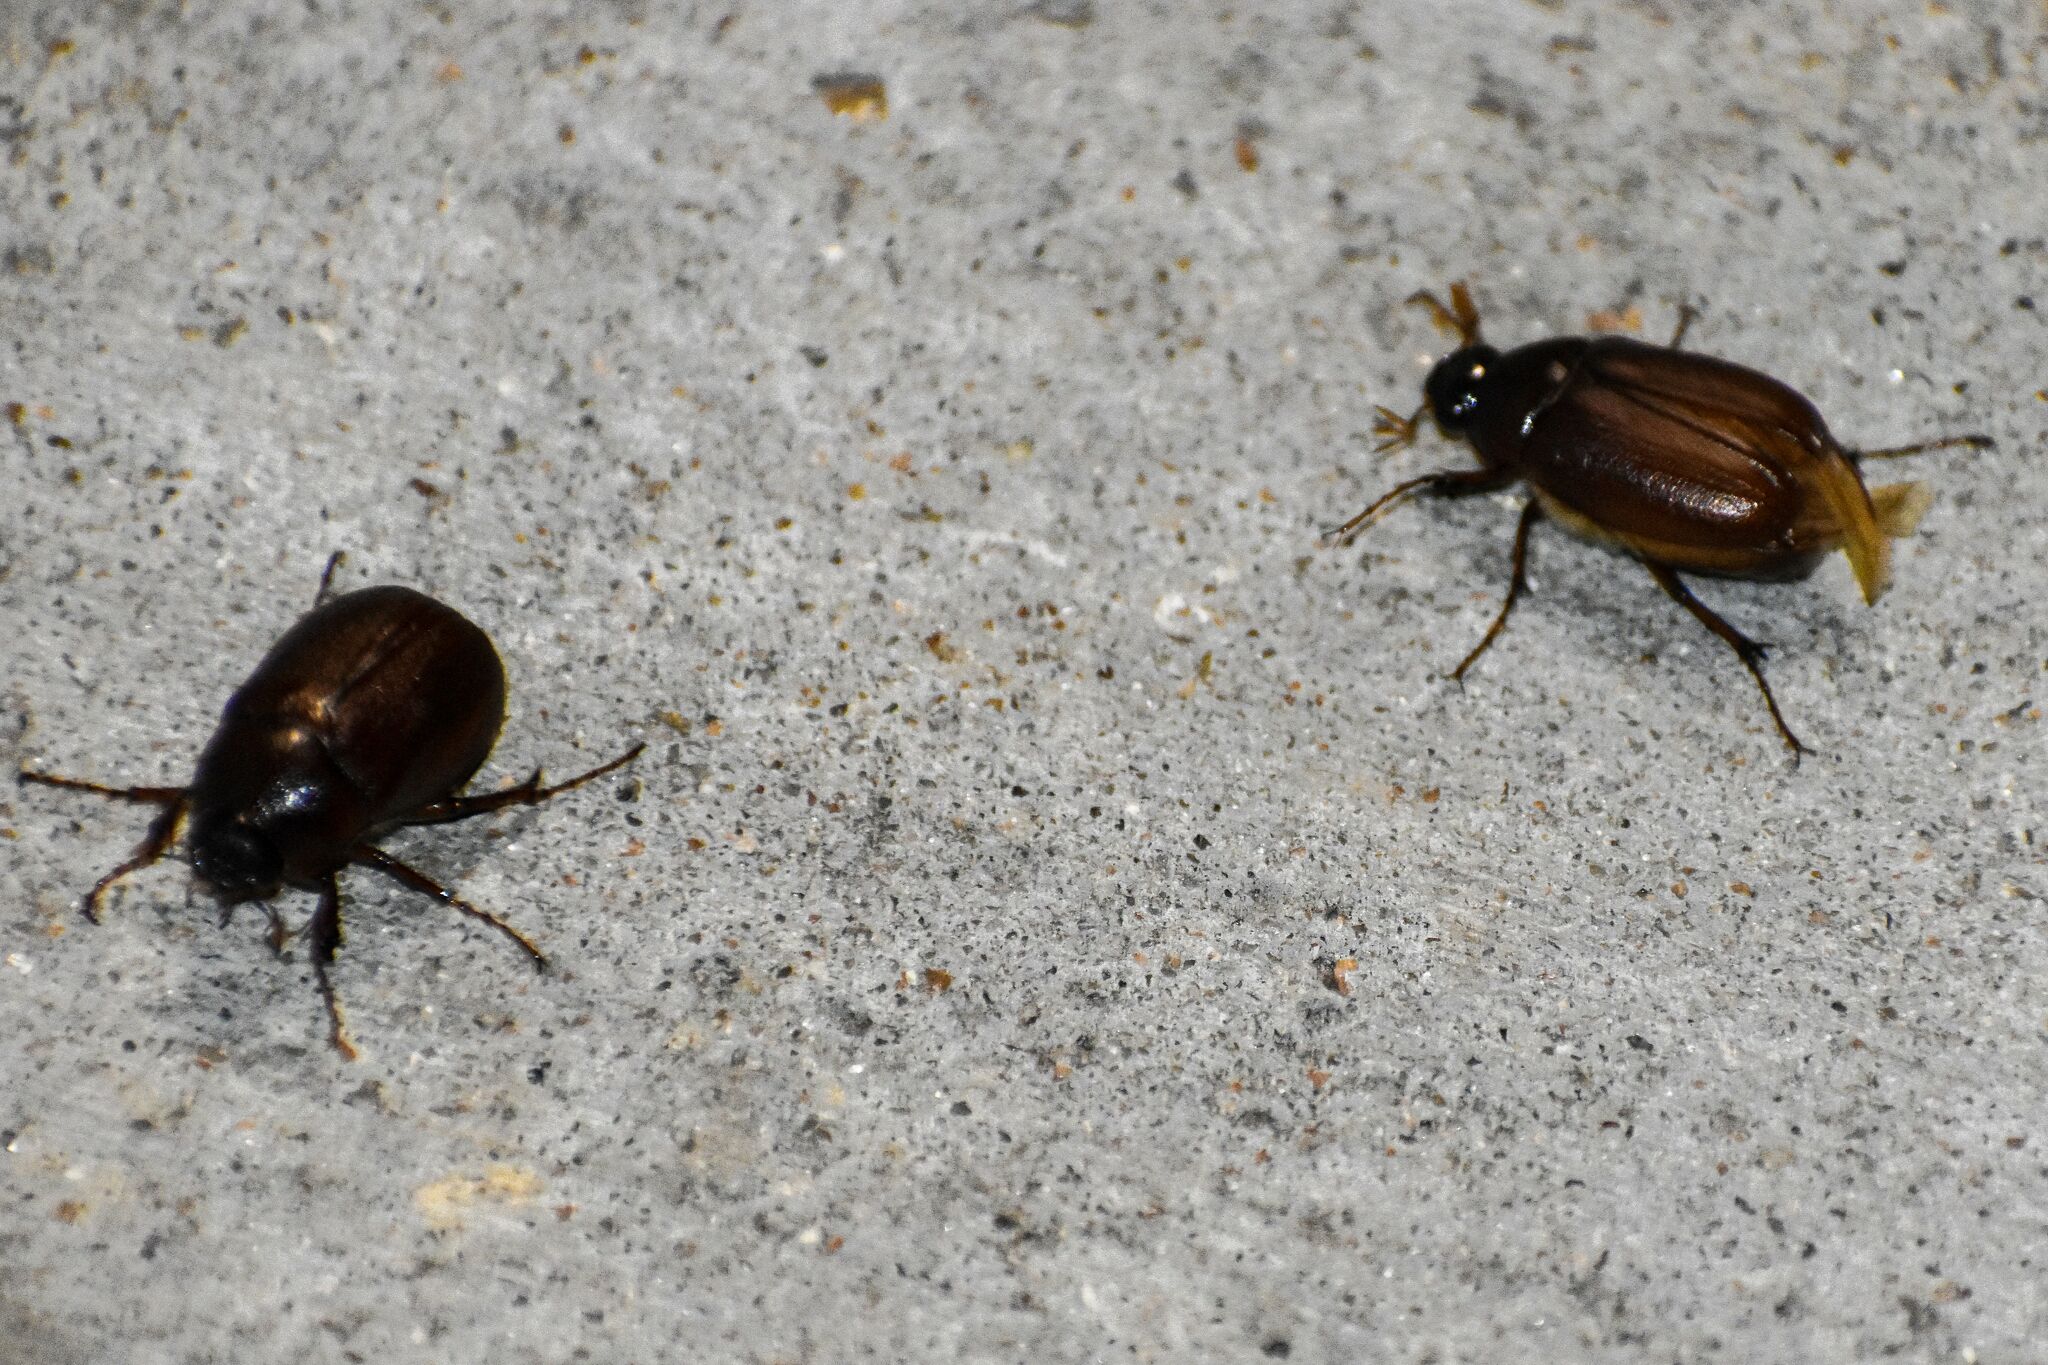 June bugs swarm Houston in spring invasion